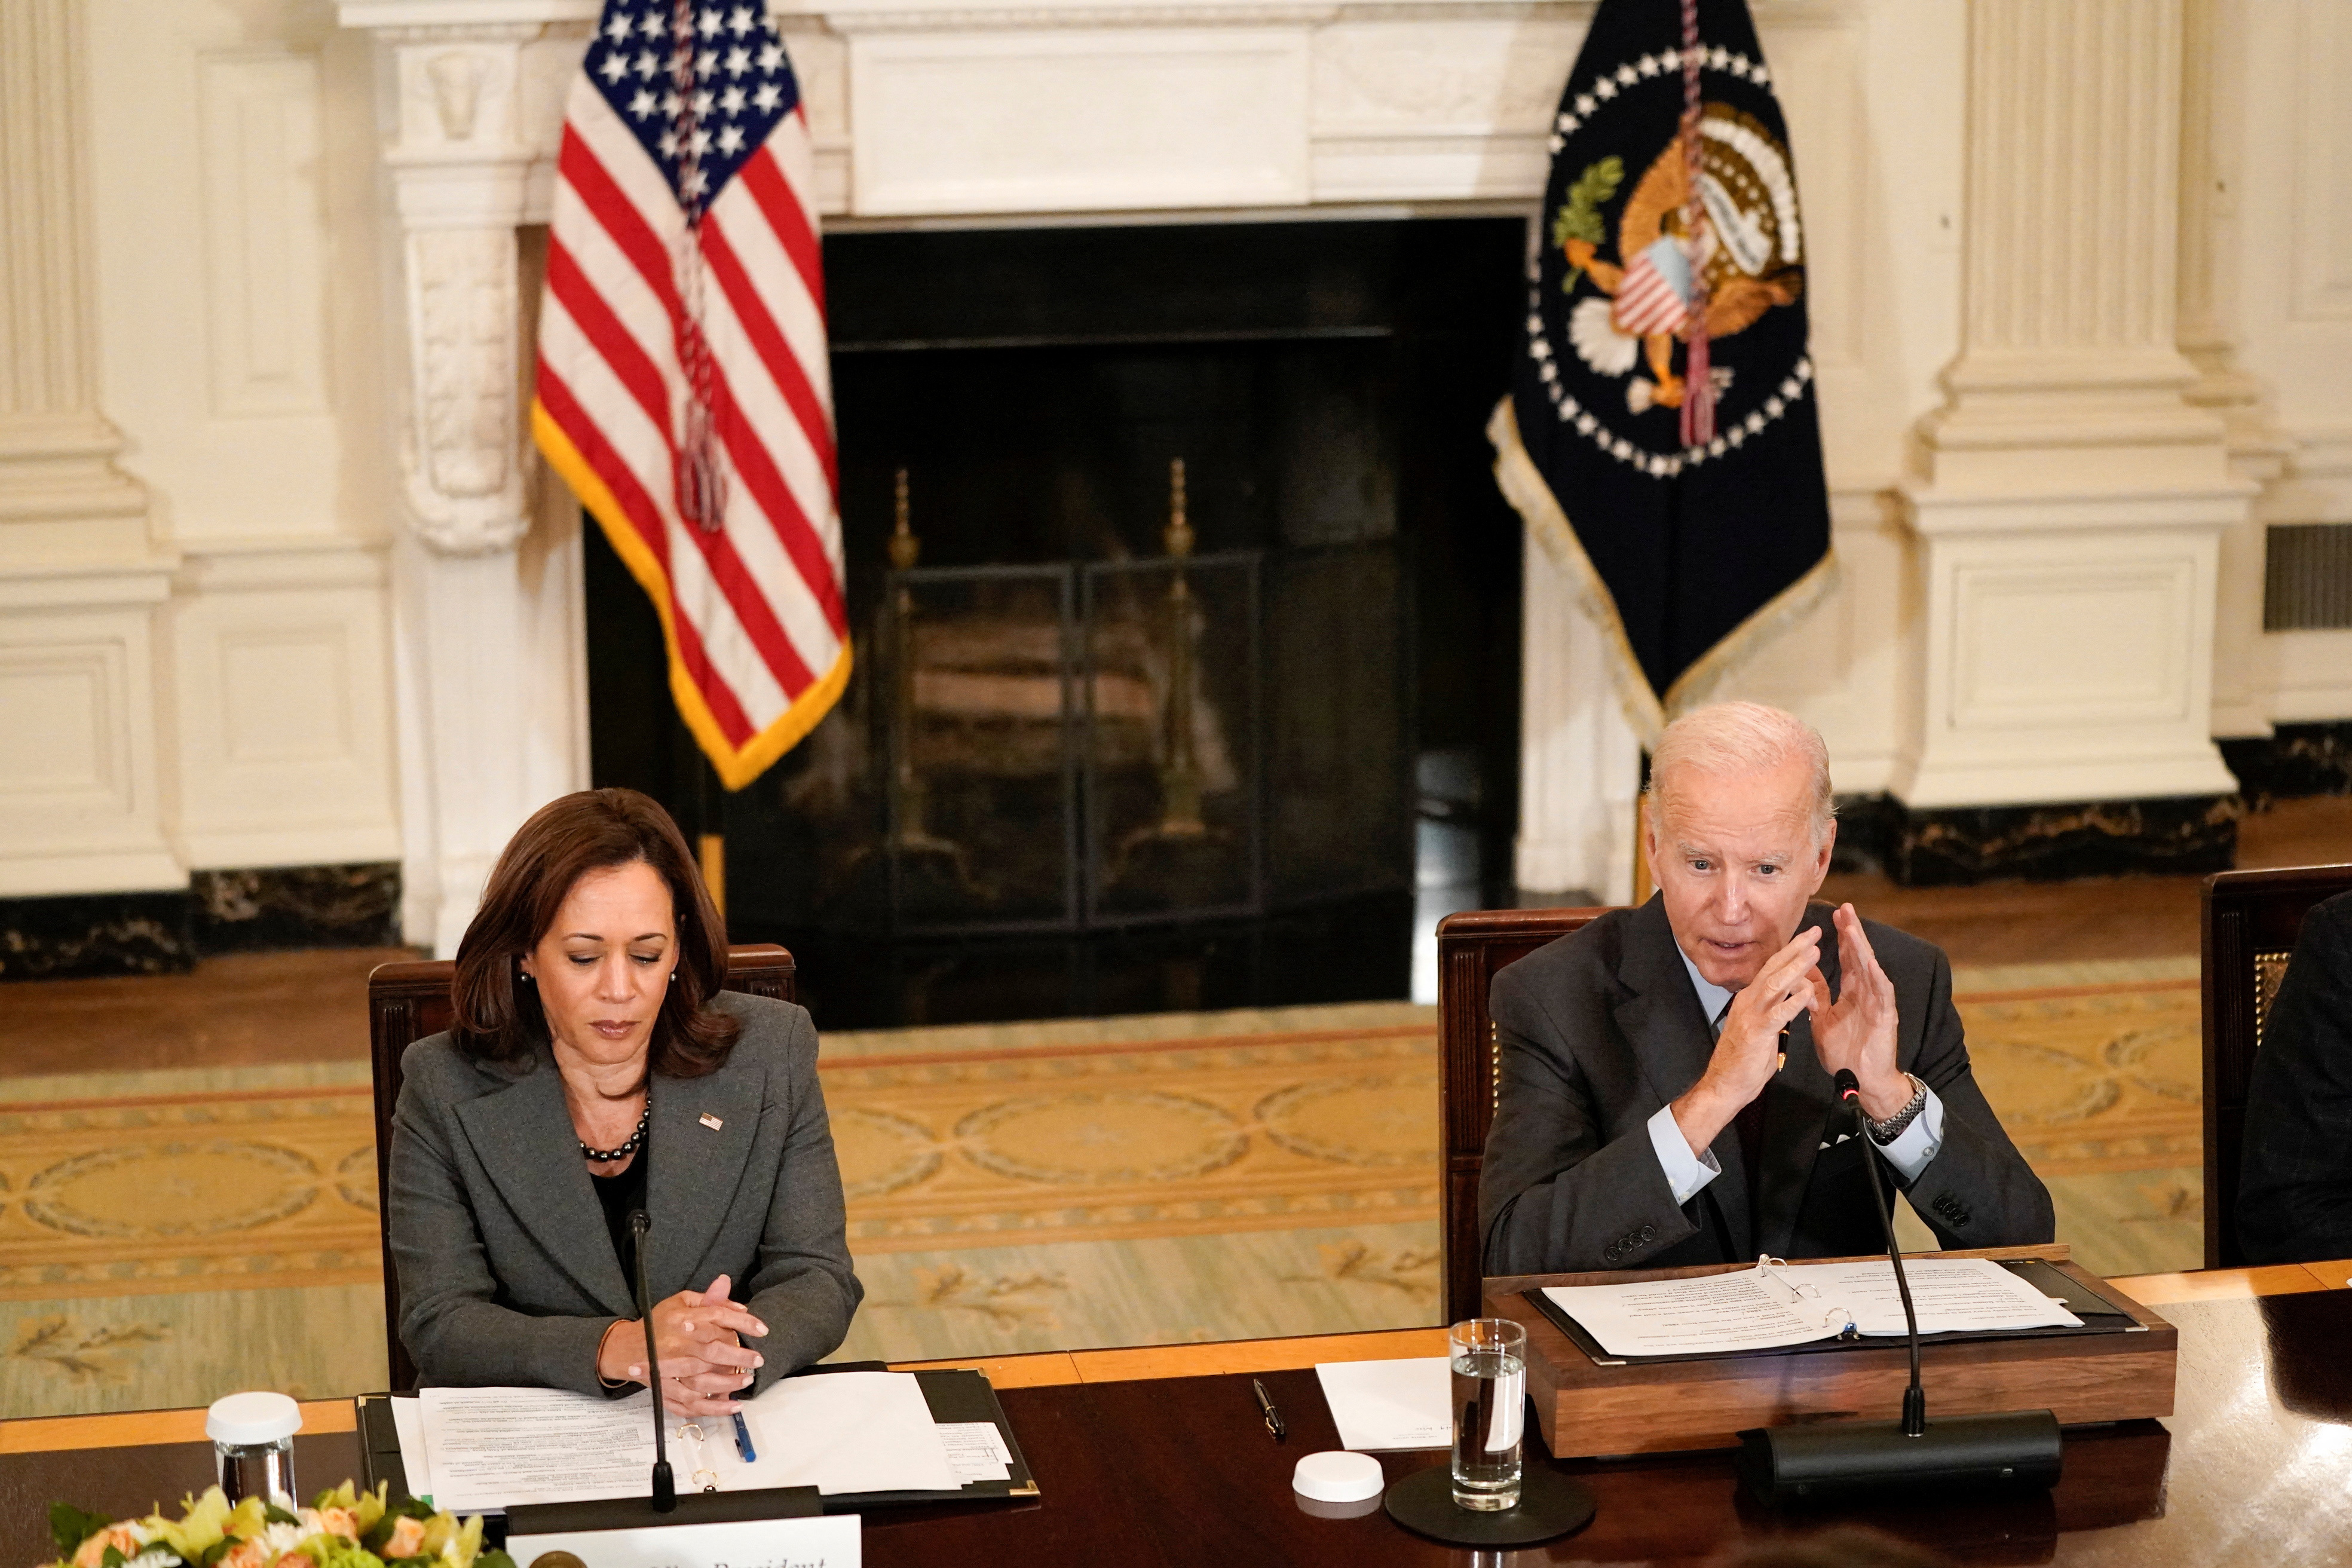 Biden takes aim at 'excess' oil profits, denounces Pelosi attack | Reuters